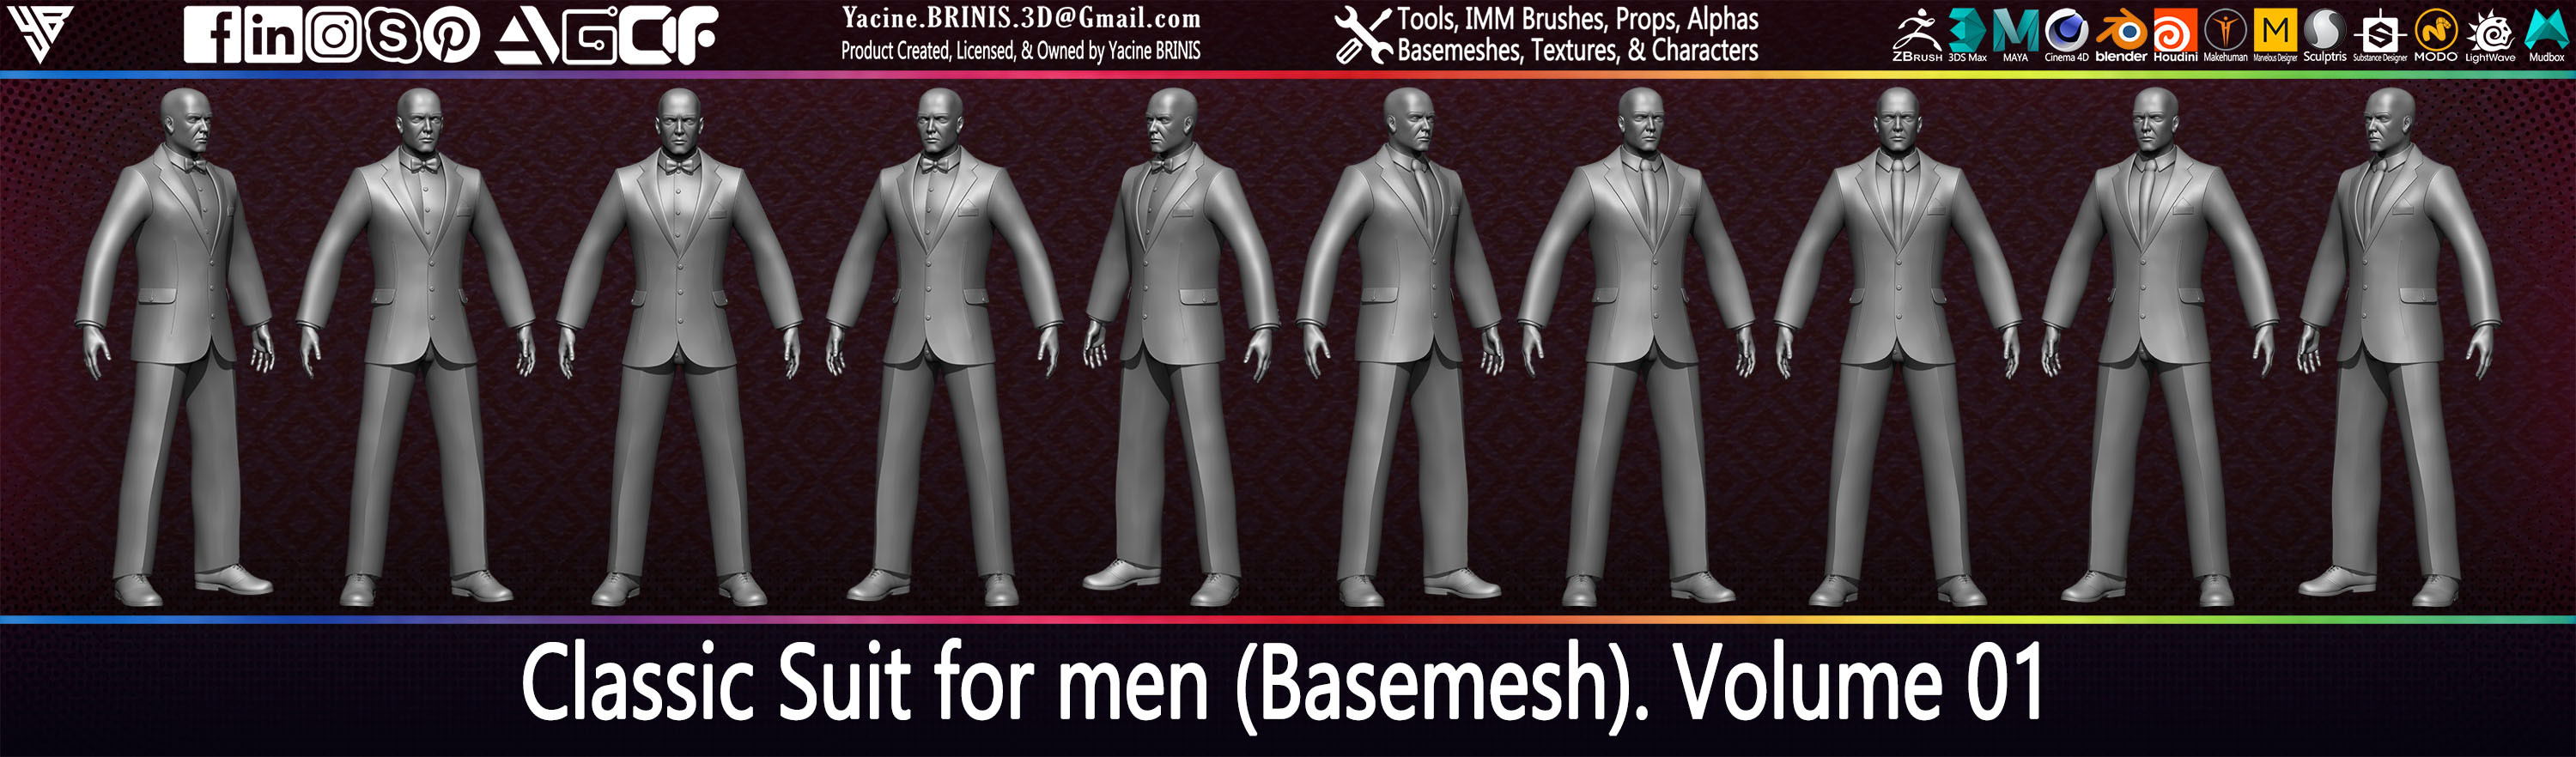 Classic Suit for men Basemesh By Yacine BRINIS Vol 01 Set 009